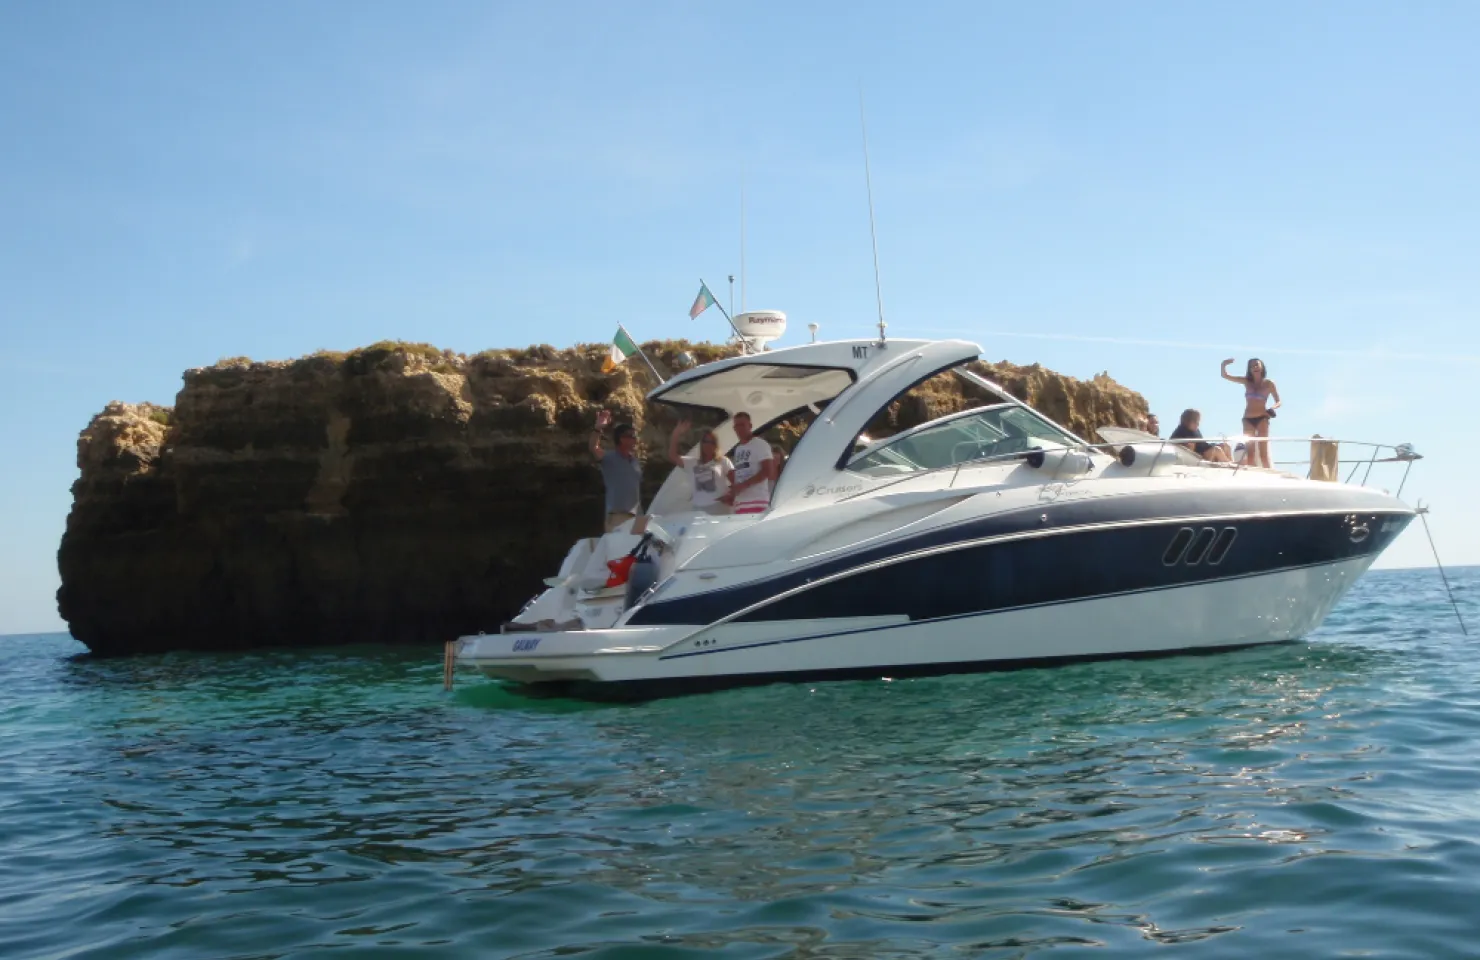 Algarve Majestic Cruises Vilamoura - Algarve Boat Trips and Tours - Vilamoura 